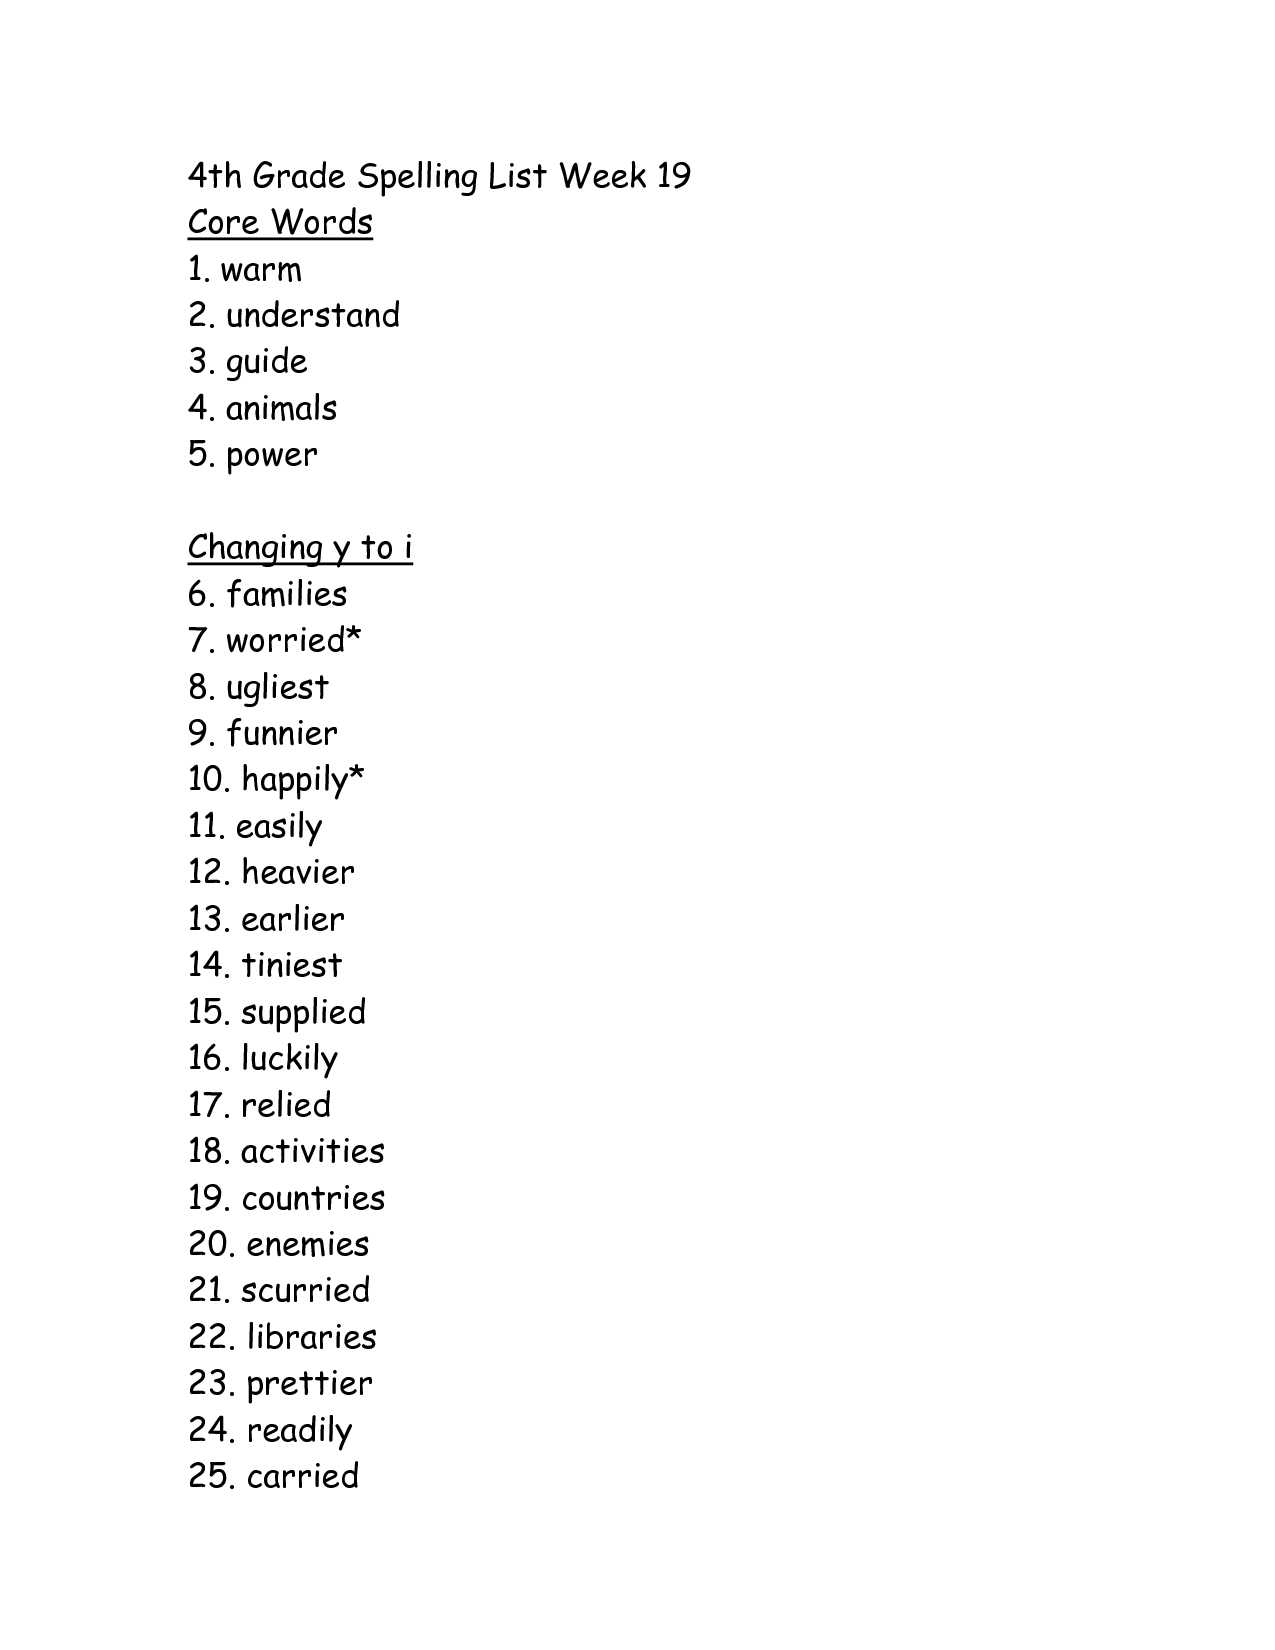 4th Grade Spelling Word List Image